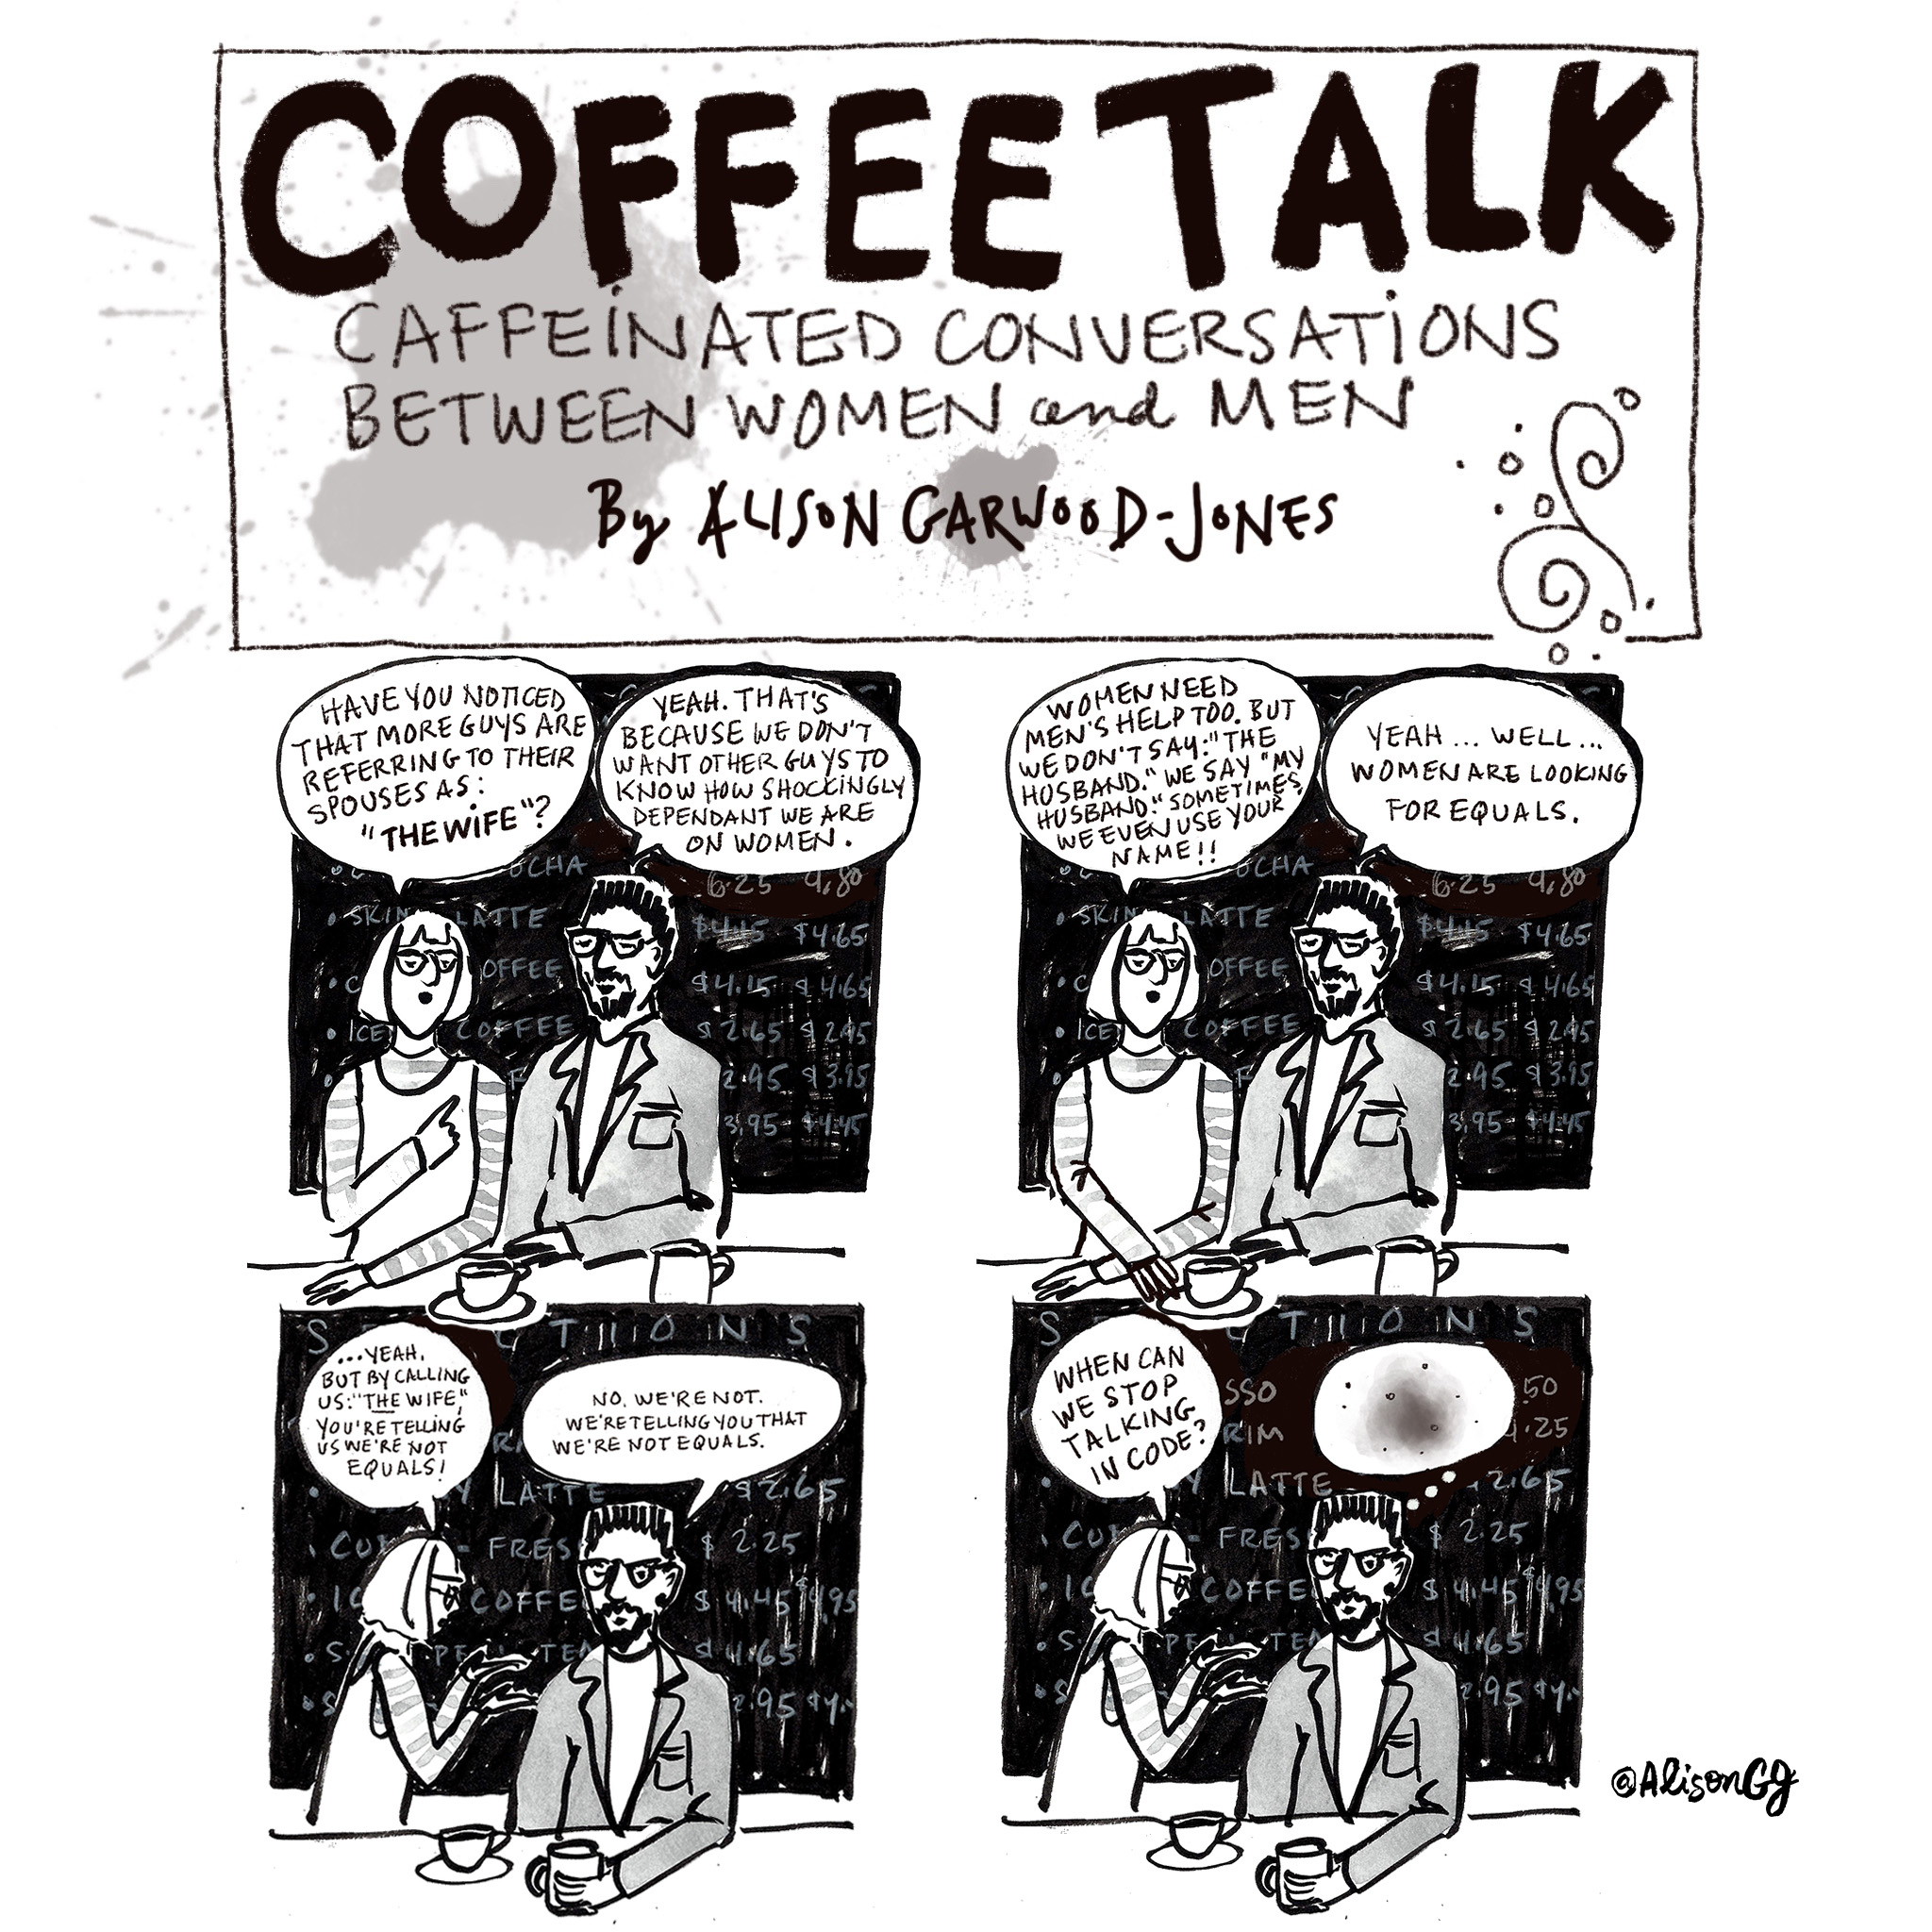 Coffee Talk Cartoon strip by Alison Garwood-Jones